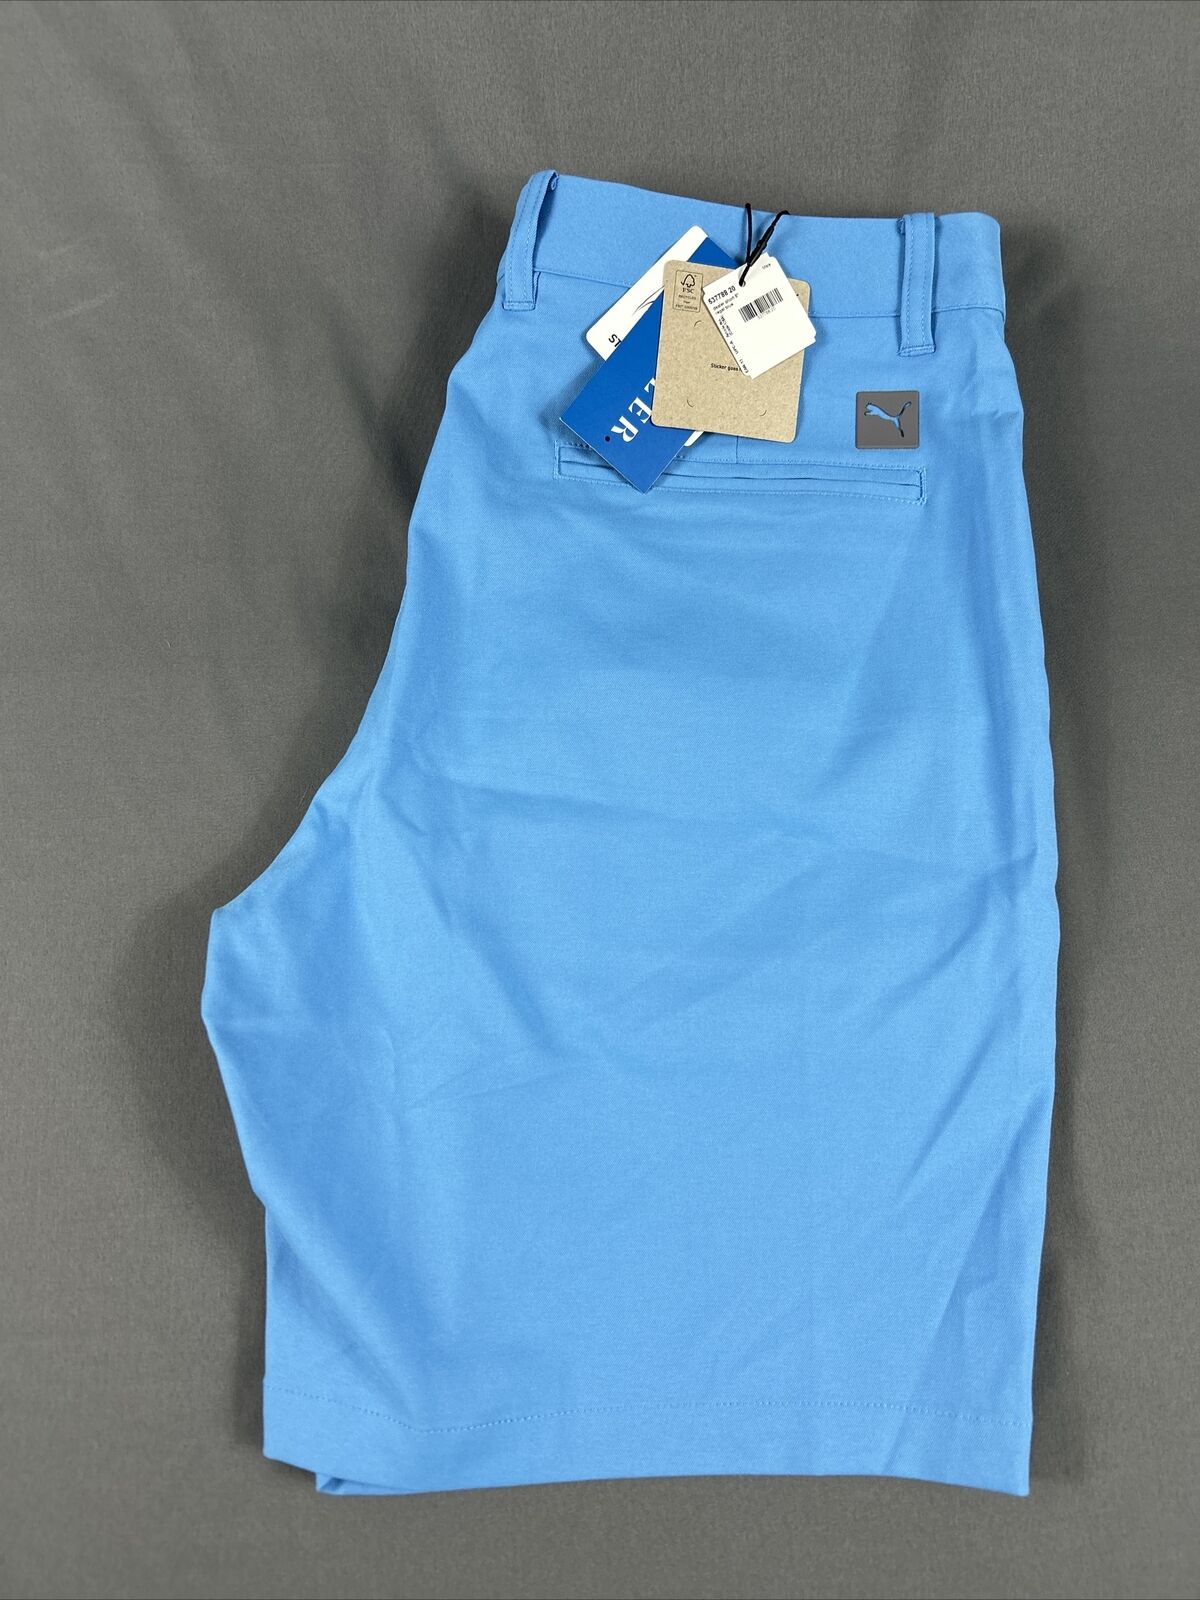 Puma Golf Shorts Dealer Performance 32 x 8 Regal Blue Polyester NWT MSRP $70